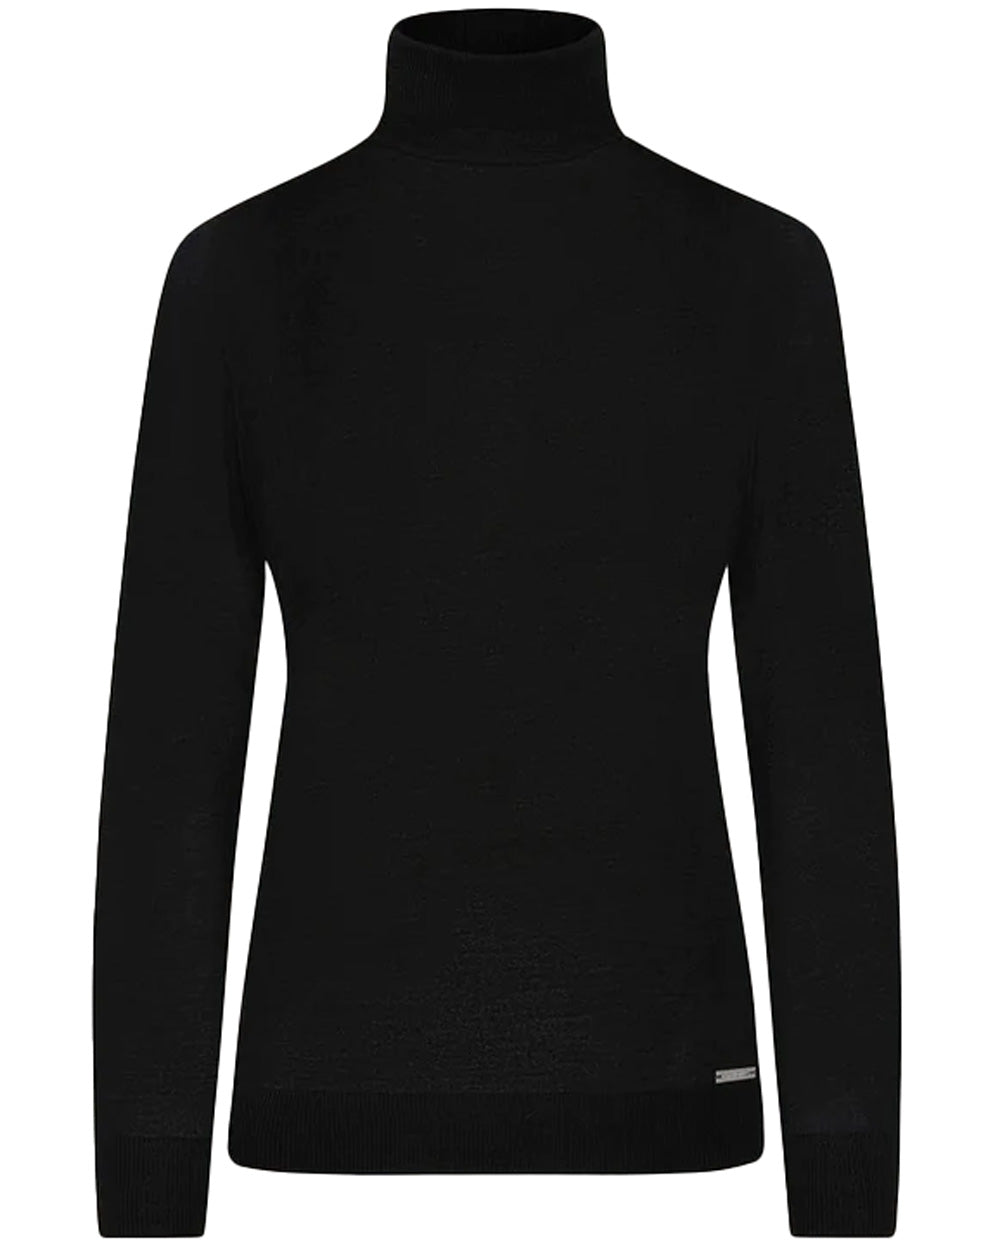 Black Knit Turtleneck Sweater